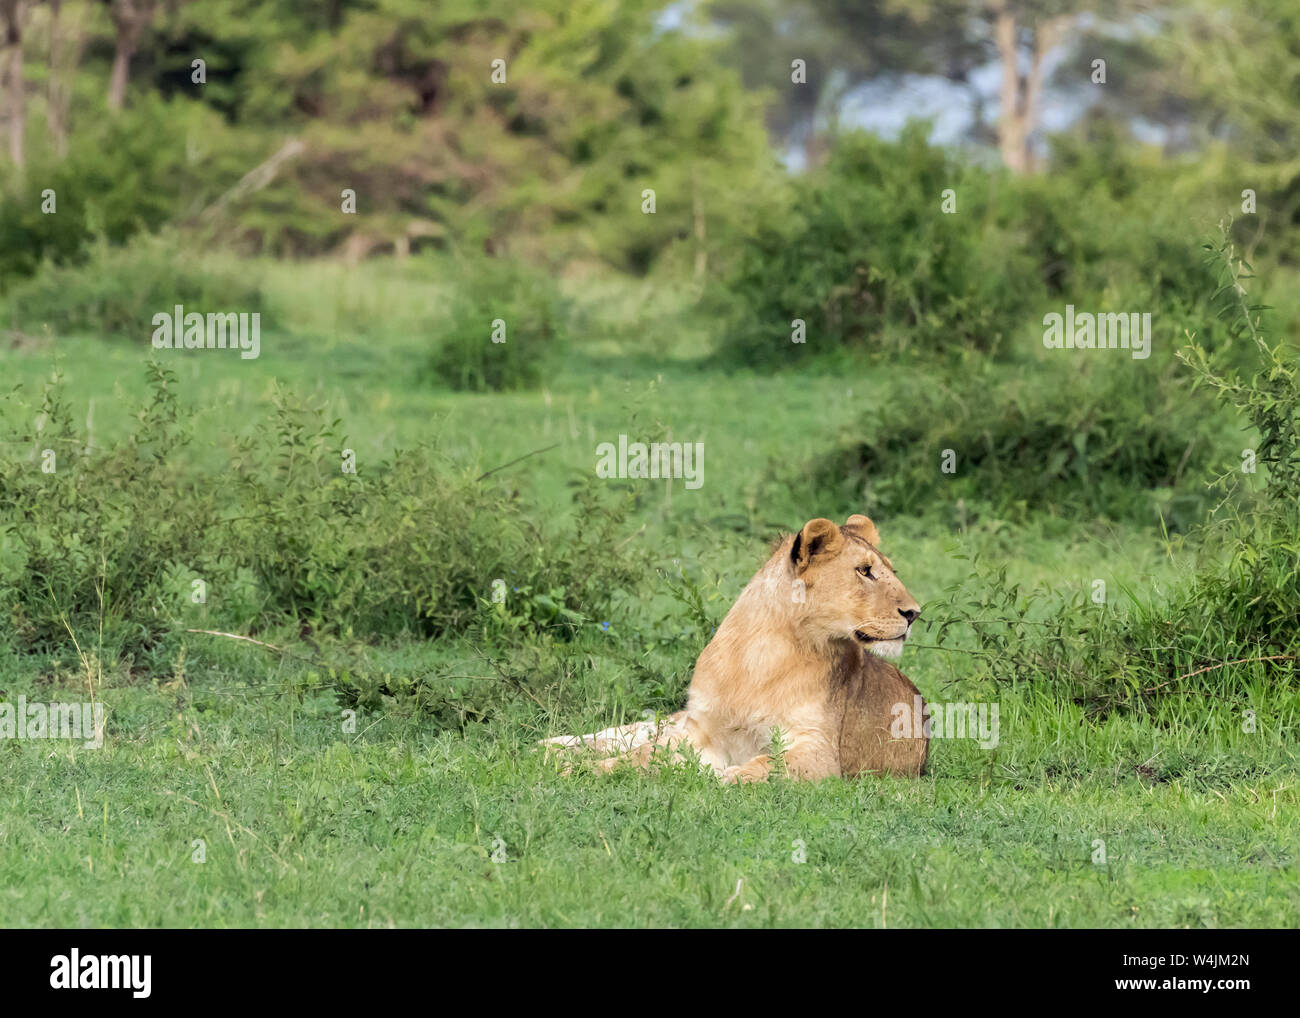 Young male lion keeping watch in fresh grass, Grumeti Game Reserve, Serengeti, Tanzania Stock Photo